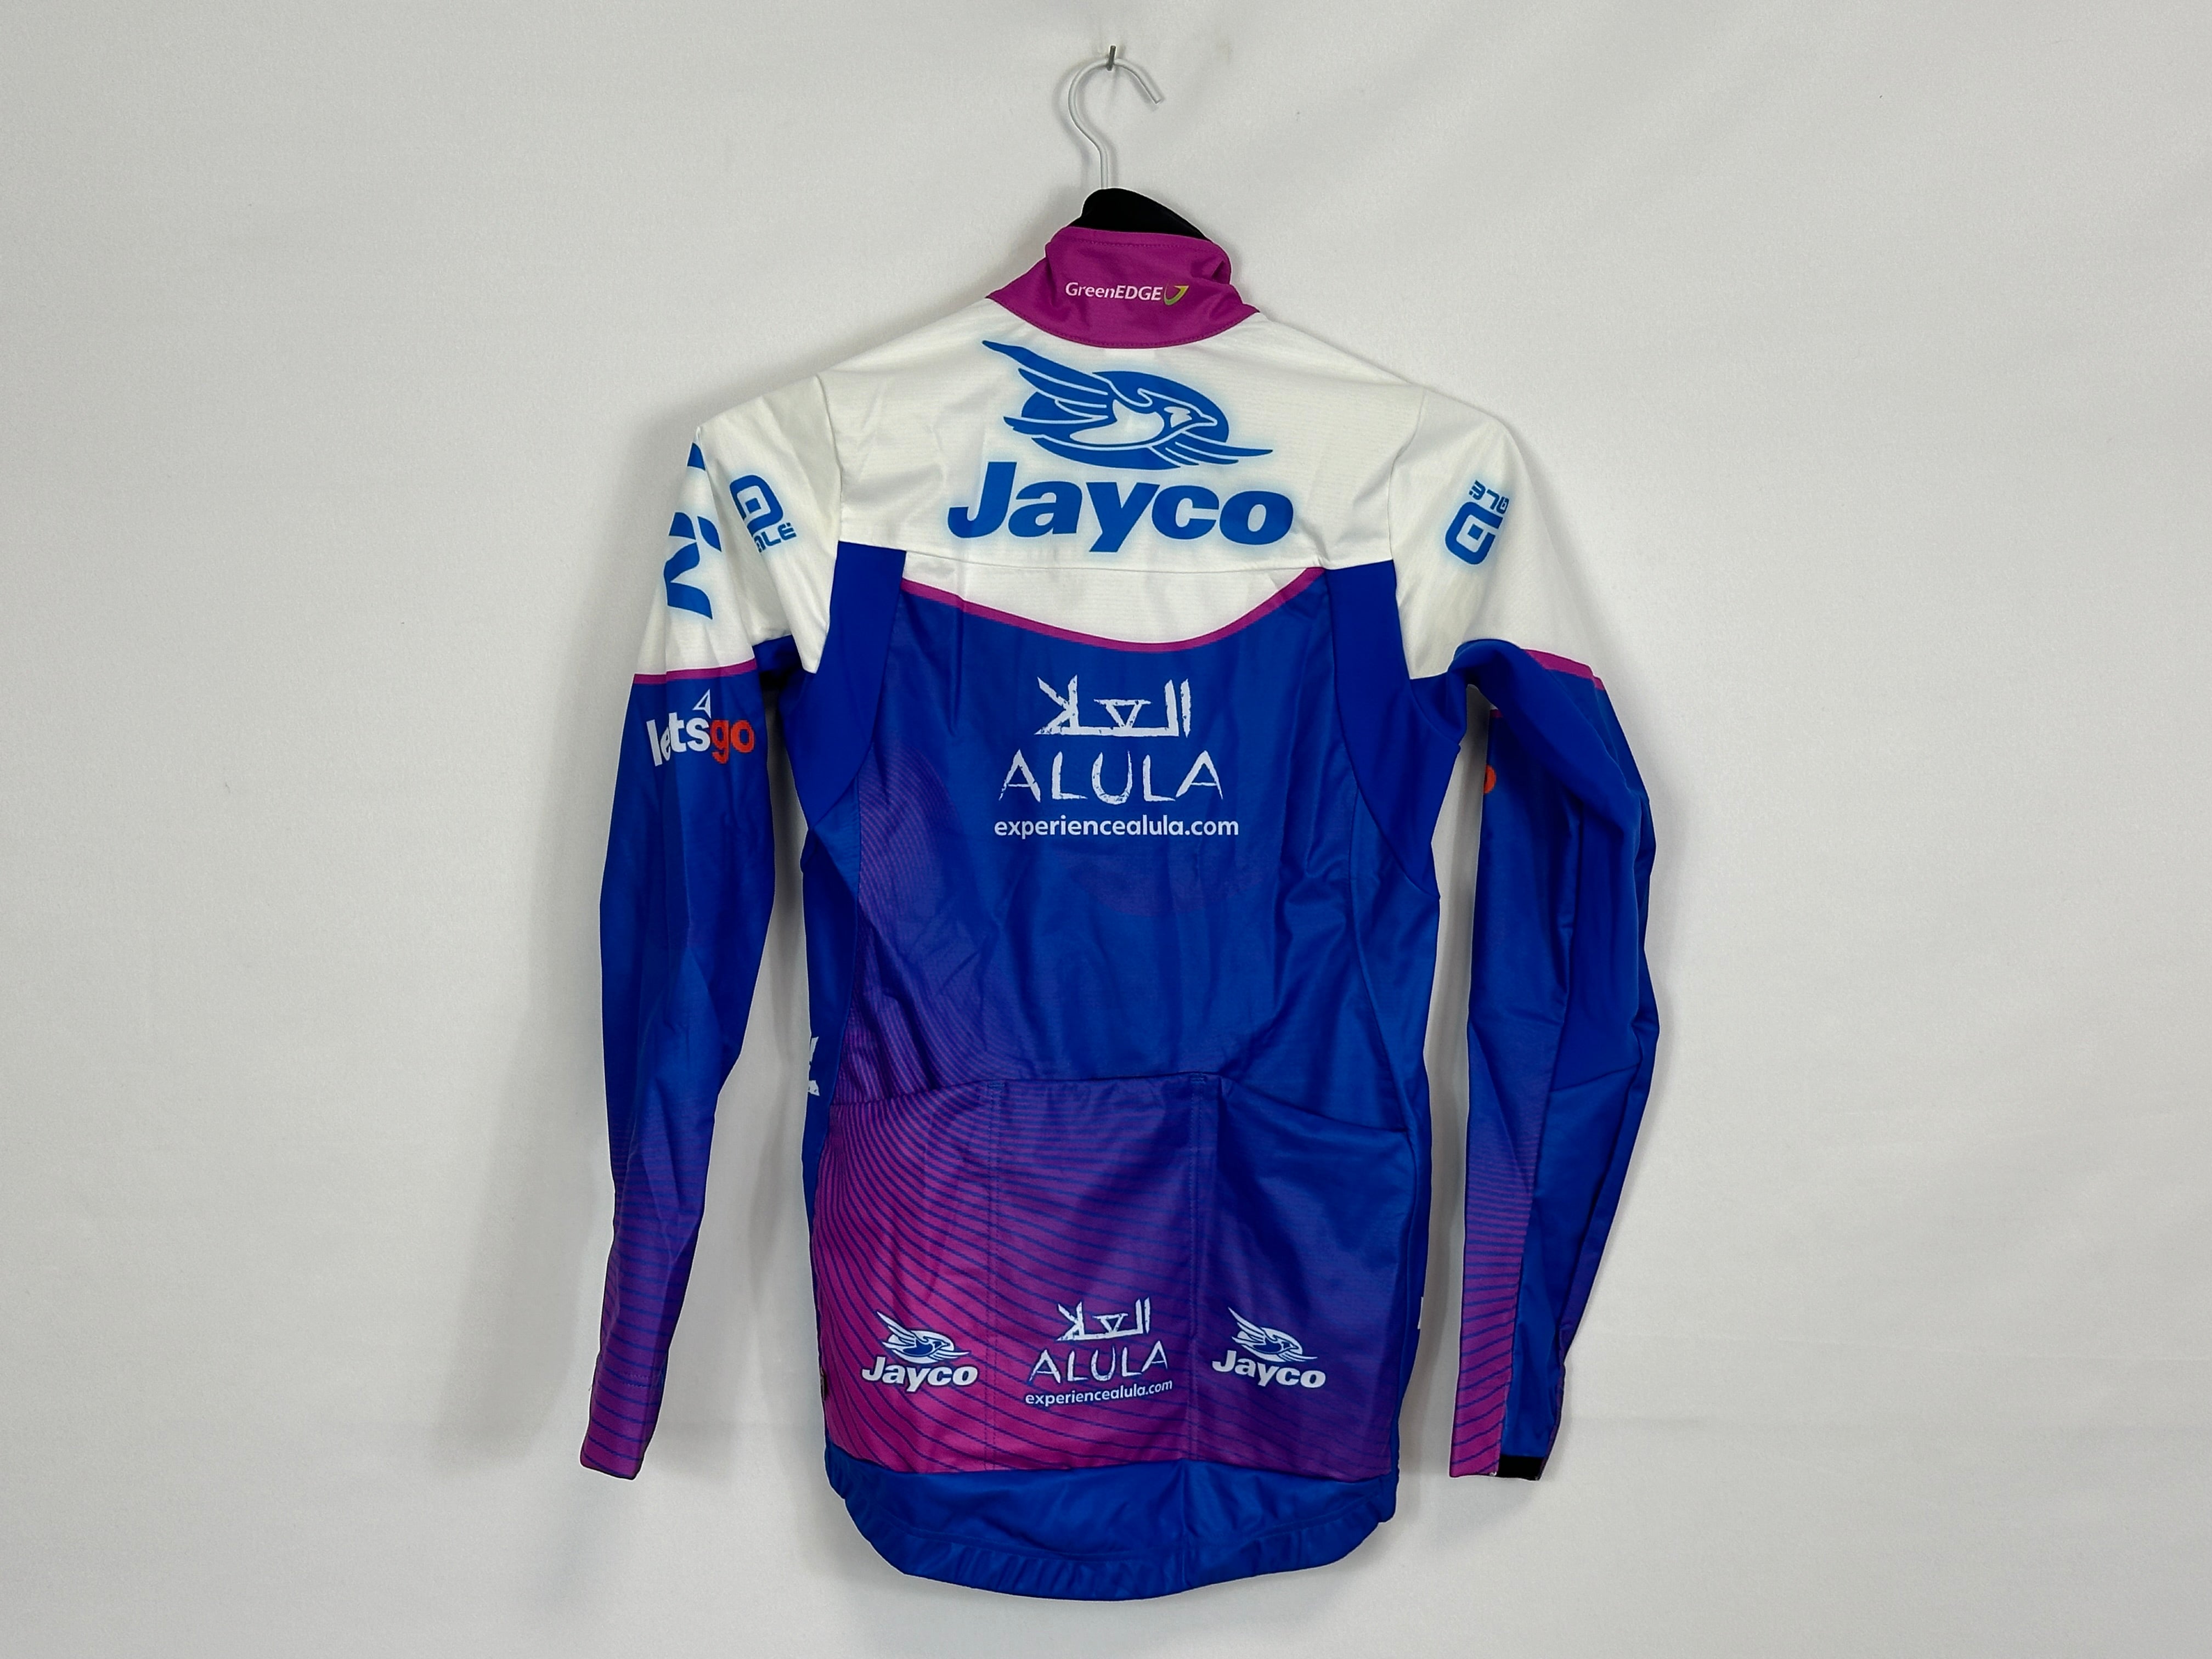 Team Jayco Alula - L/S Waterproof Jacket by Alé